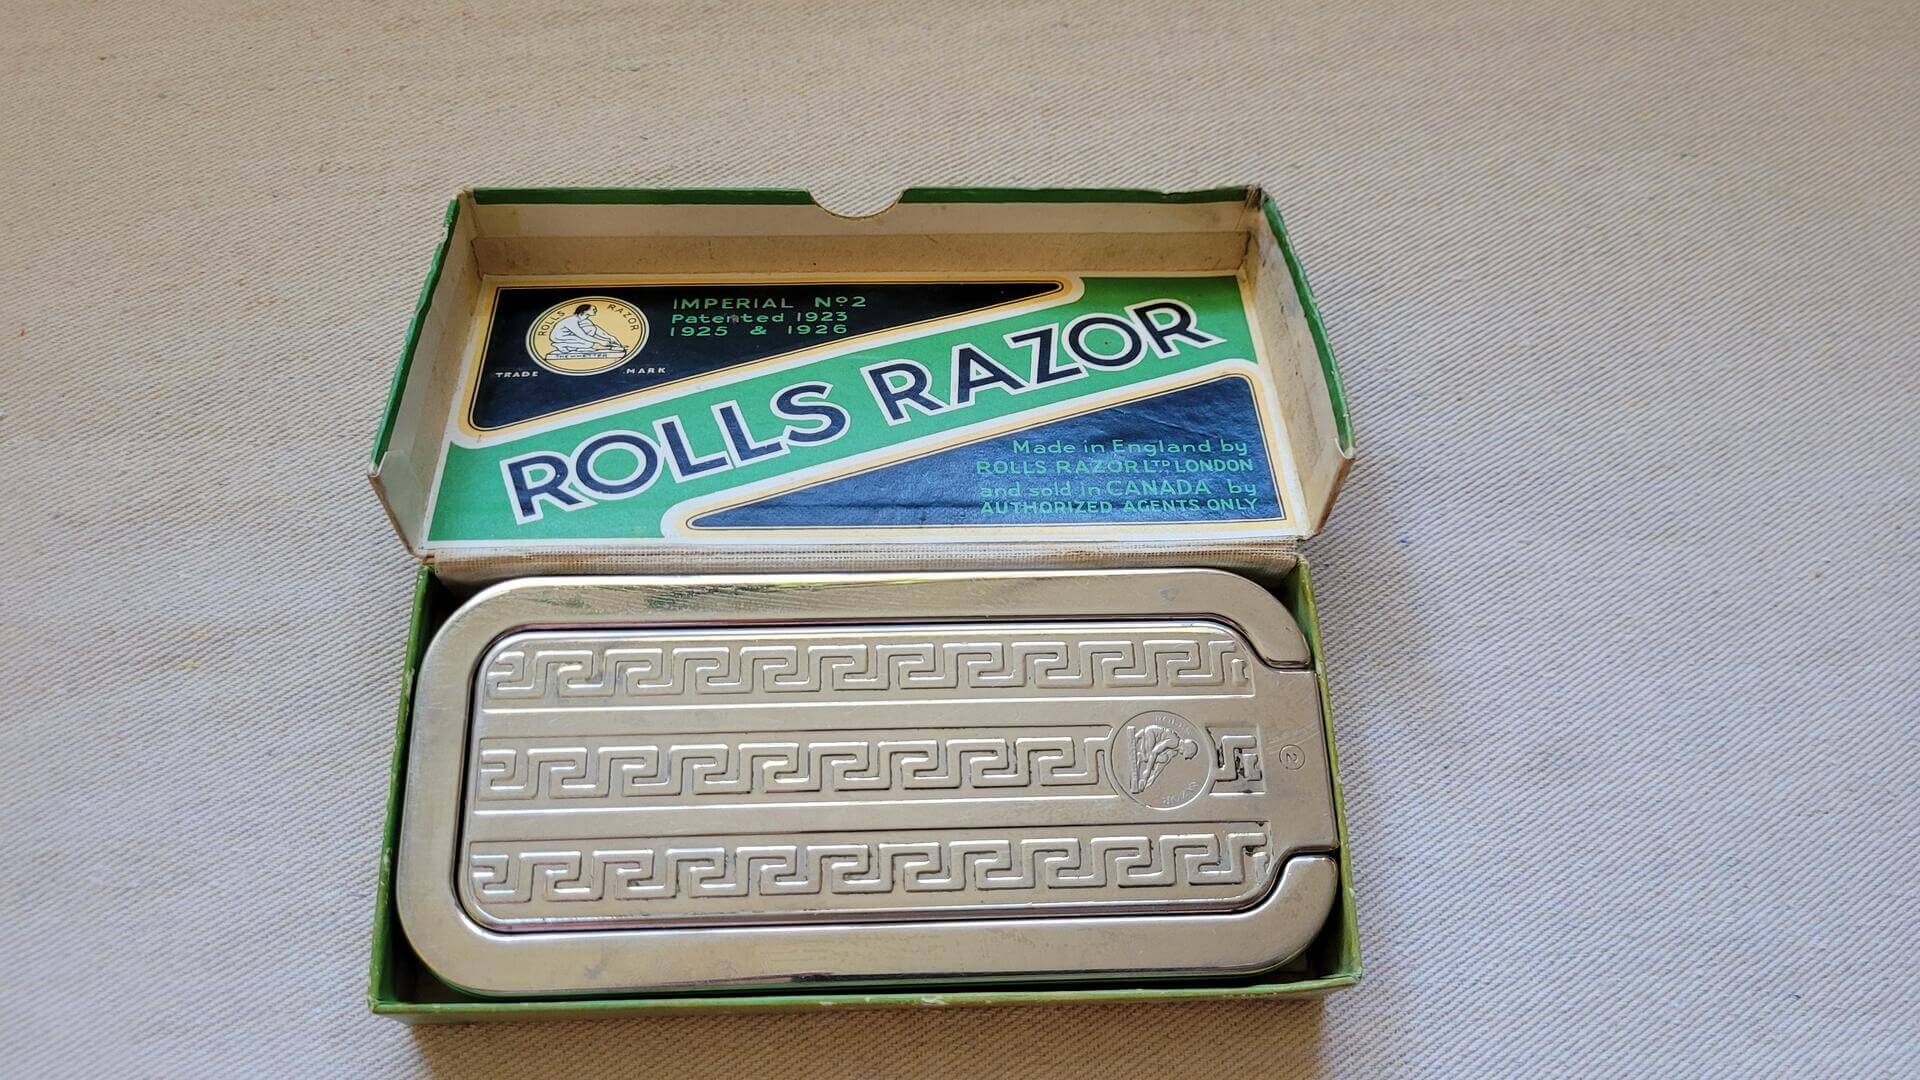 Vintage Rolls Razor Shaving Sharpener Strop w Instructions & Case - antique Art Deco 1920s design Made in England shaving collectibles